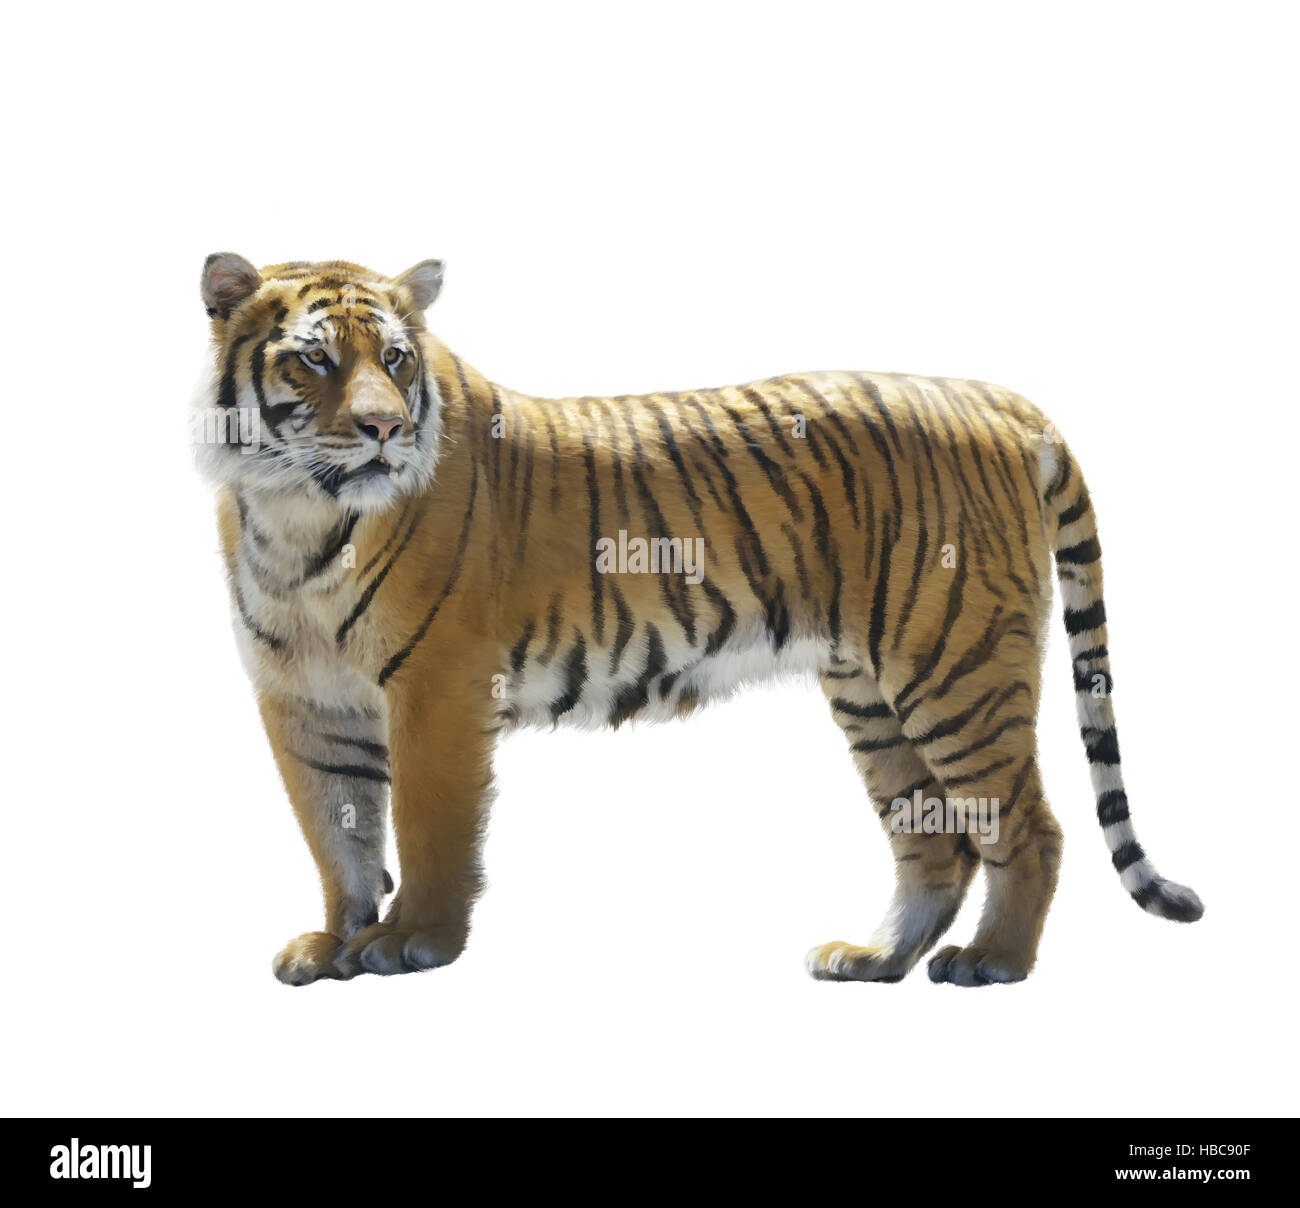 Tiger on White Background Stock Photo